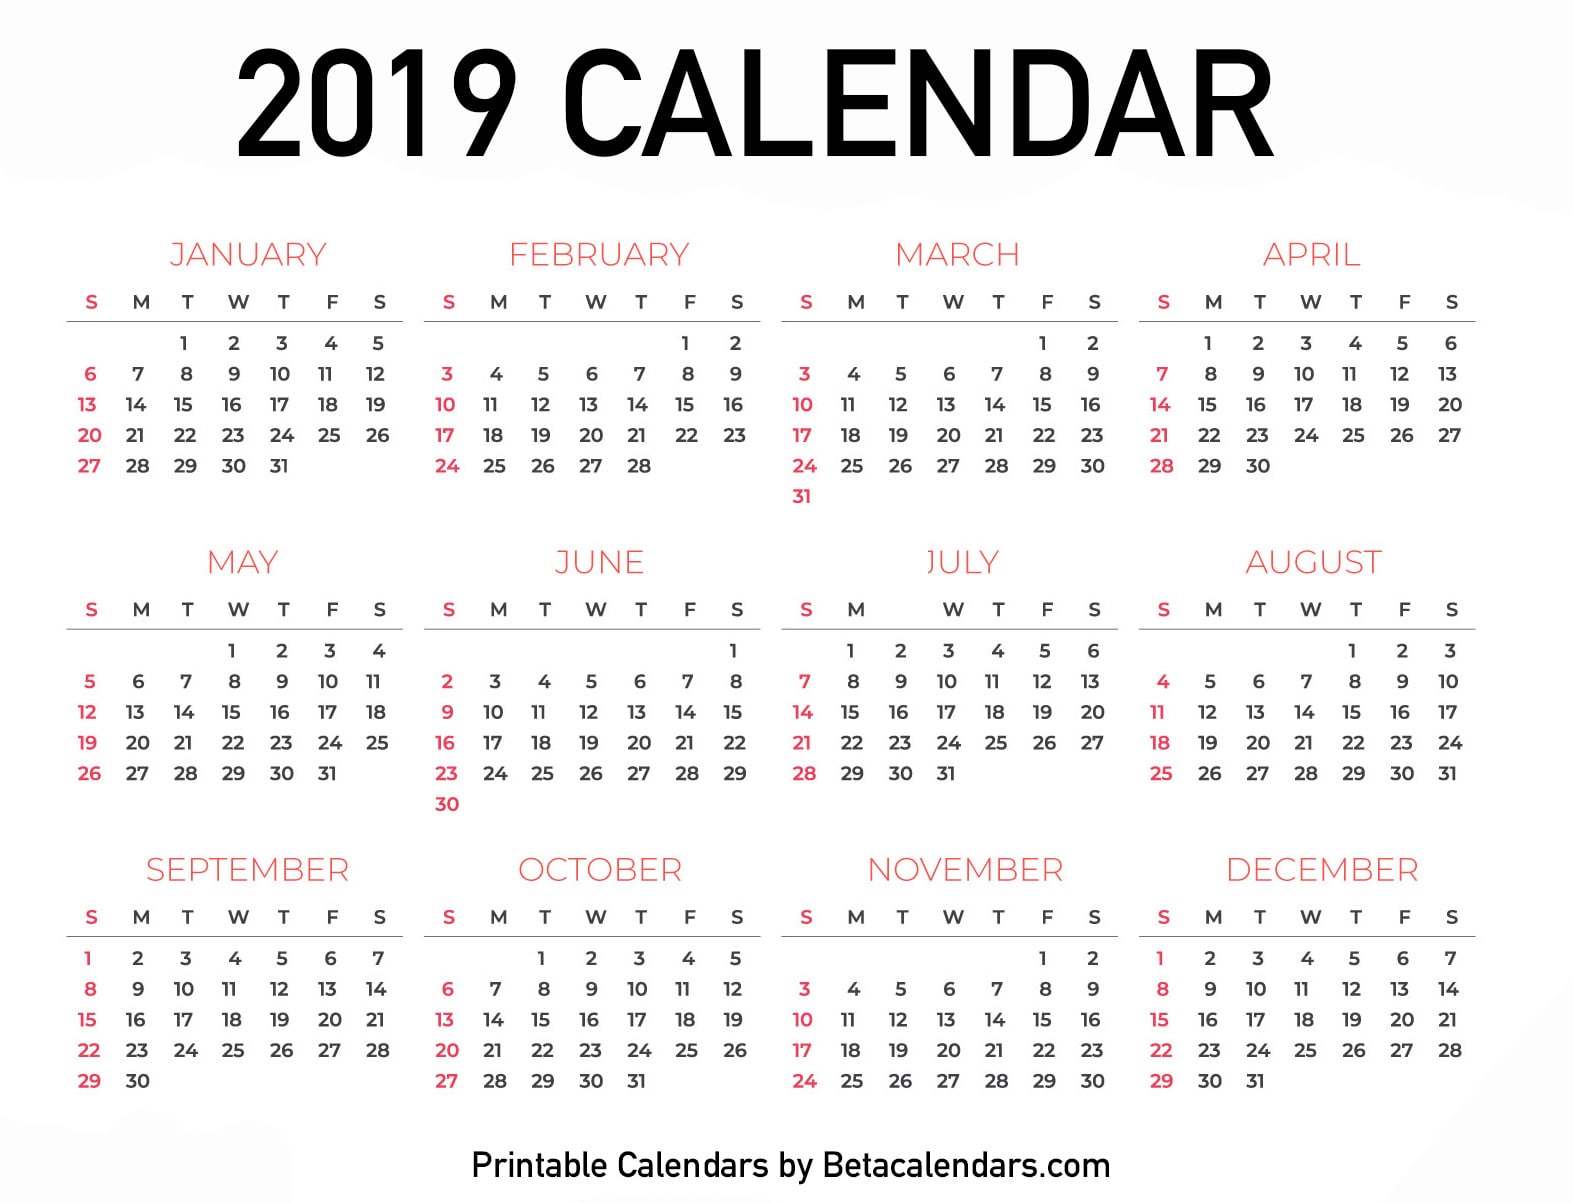 download-2019-calendar-printable-with-holidays-list-free-calendar